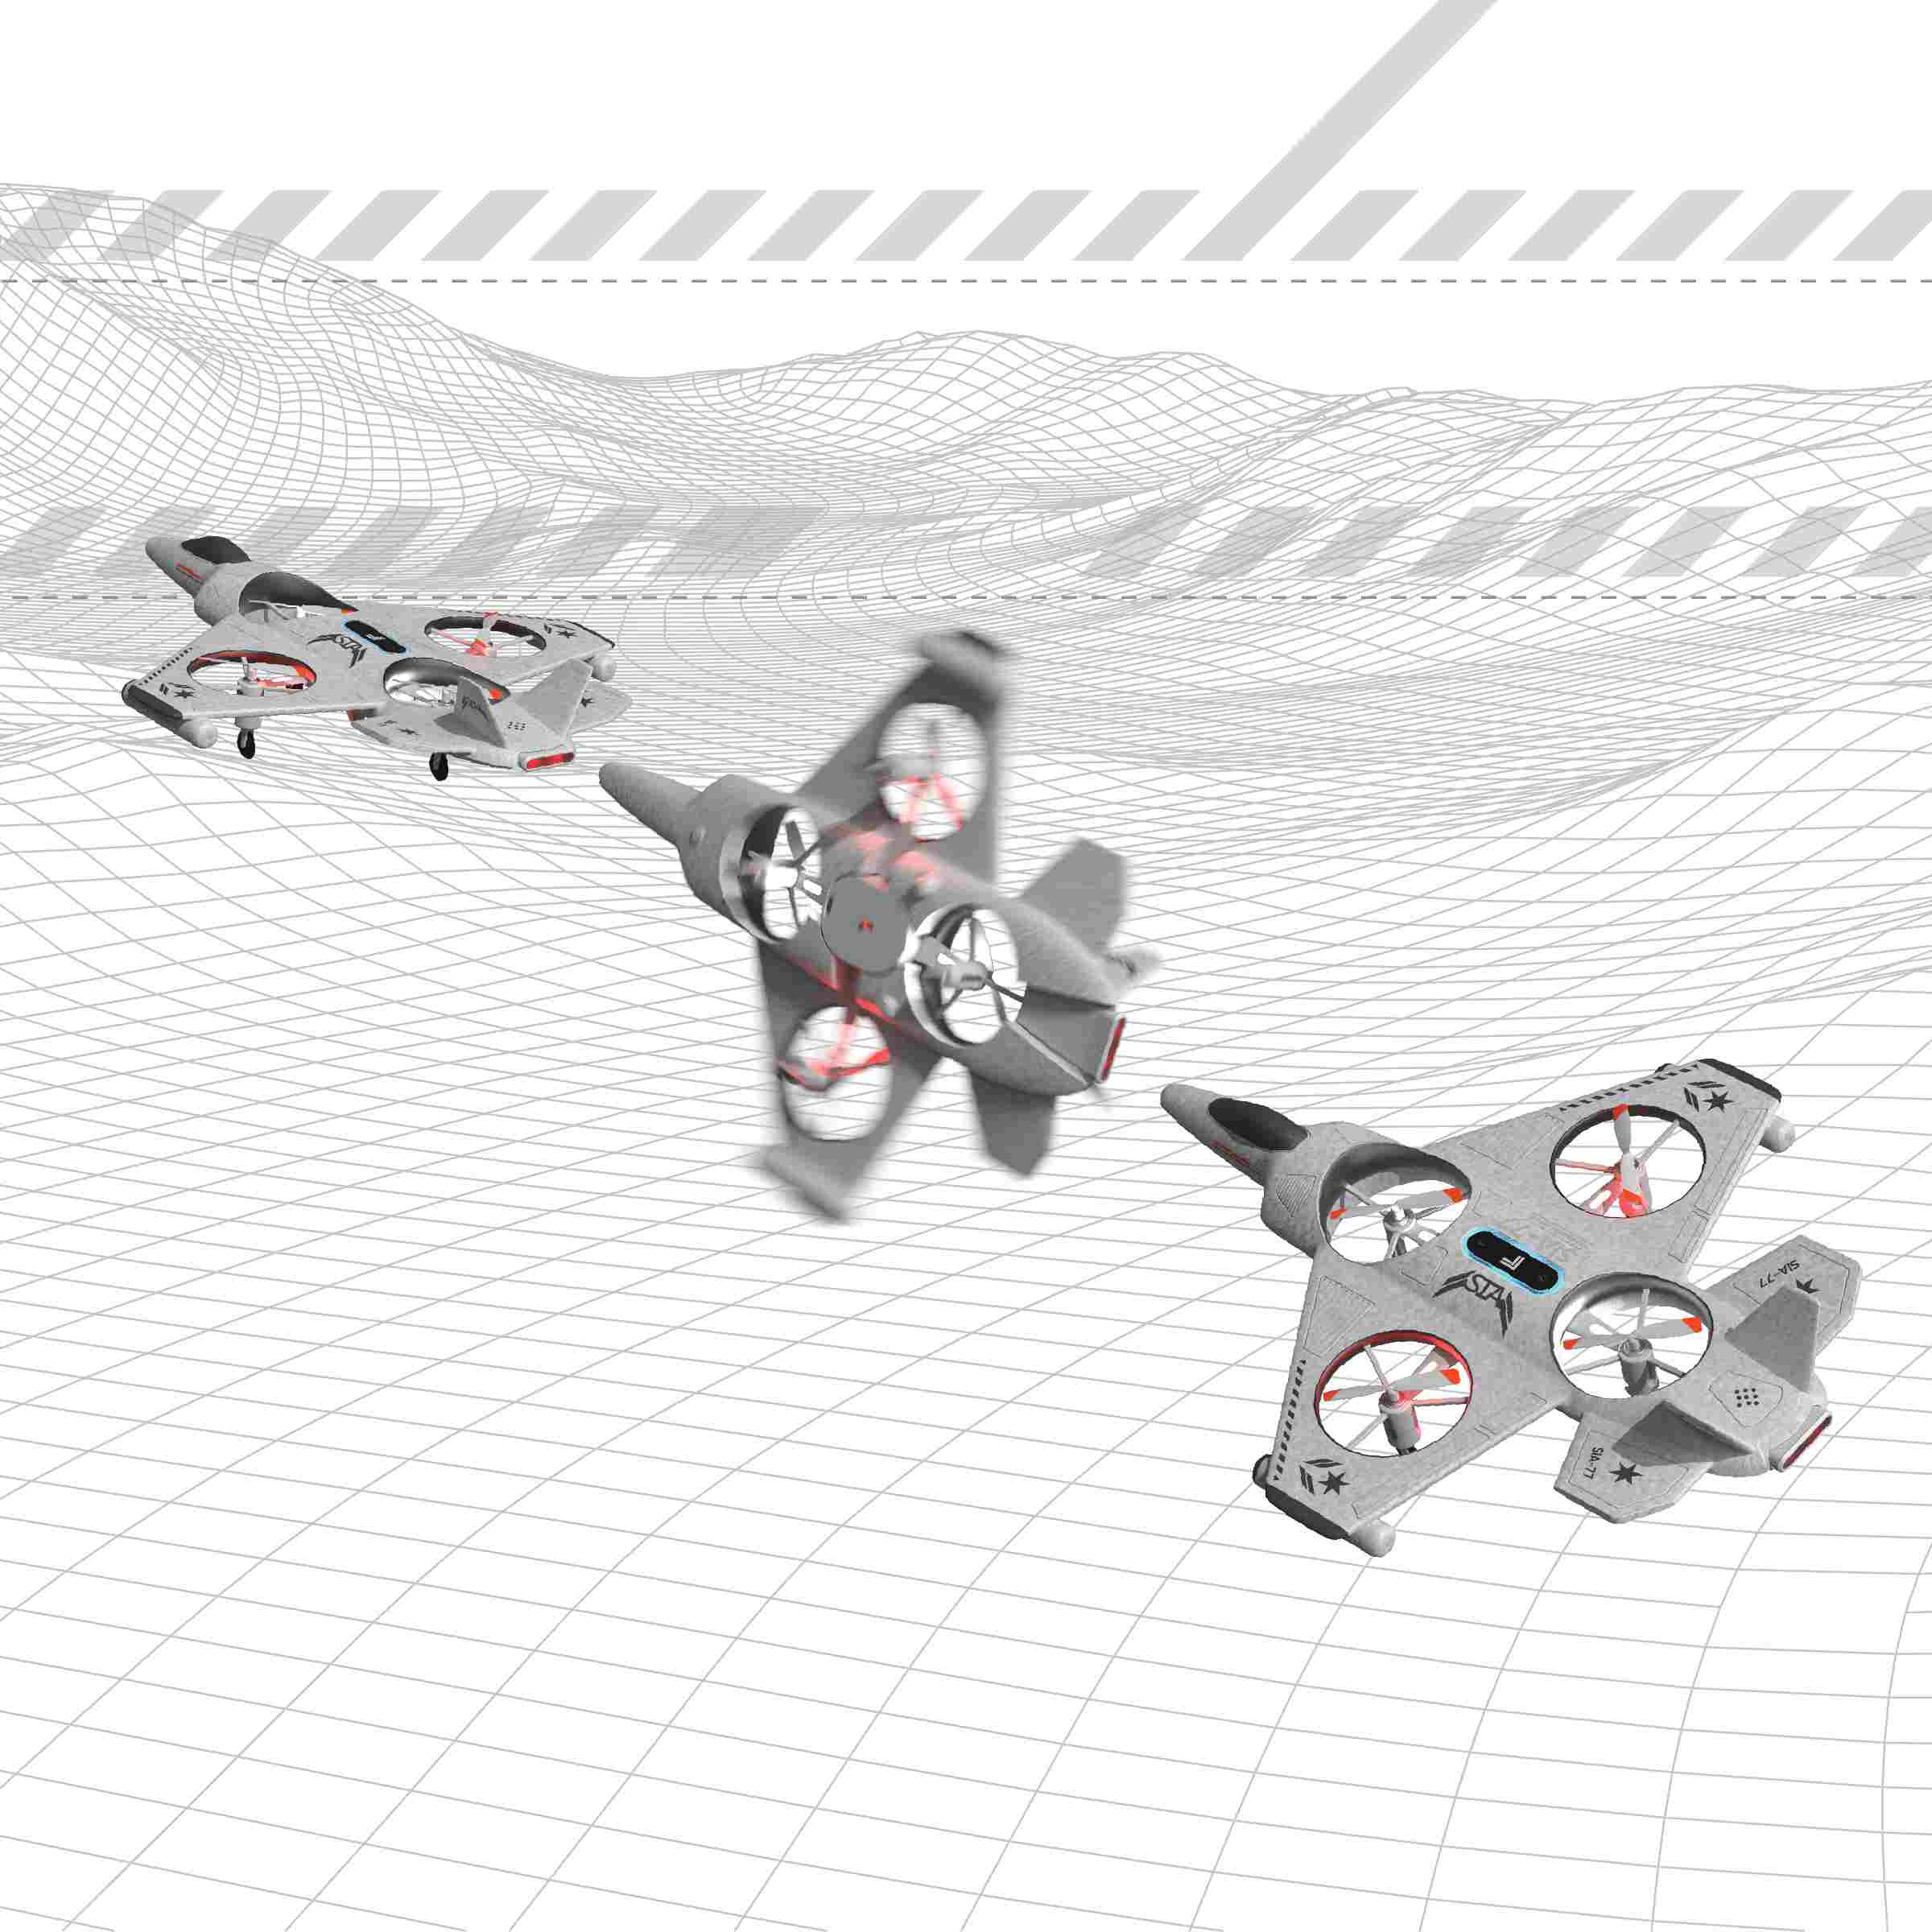 Drone thunderbolt jet x2 - Sharper Image